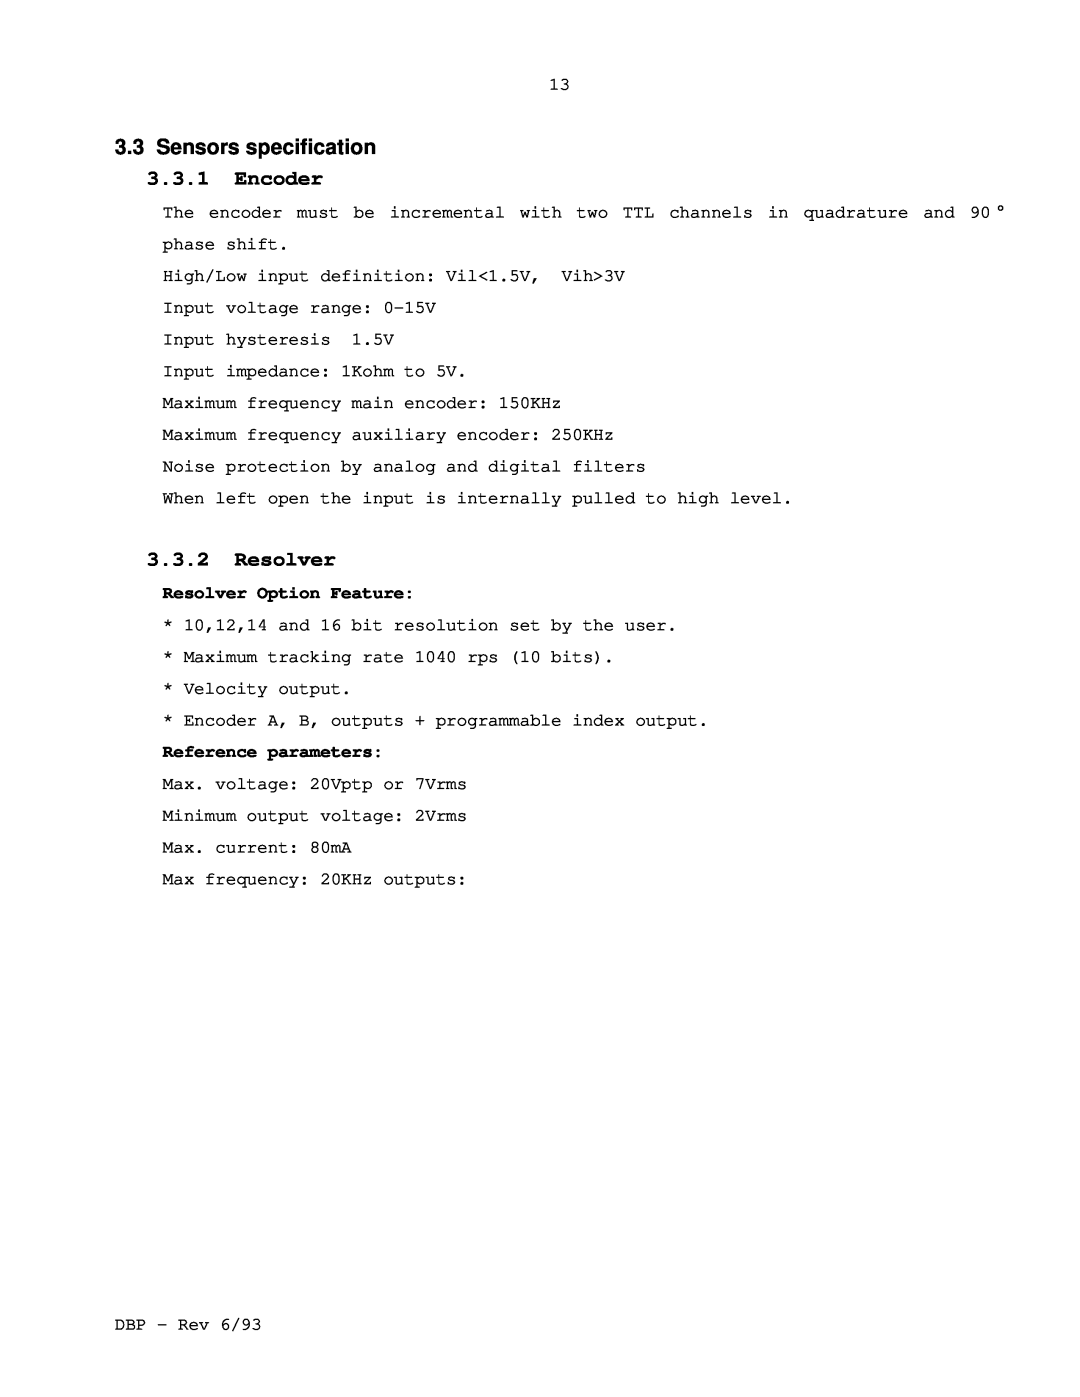 Elmo DBP SERIES manual 3.3Sensors specification, 3.3.1Encoder, 3.3.2Resolver 